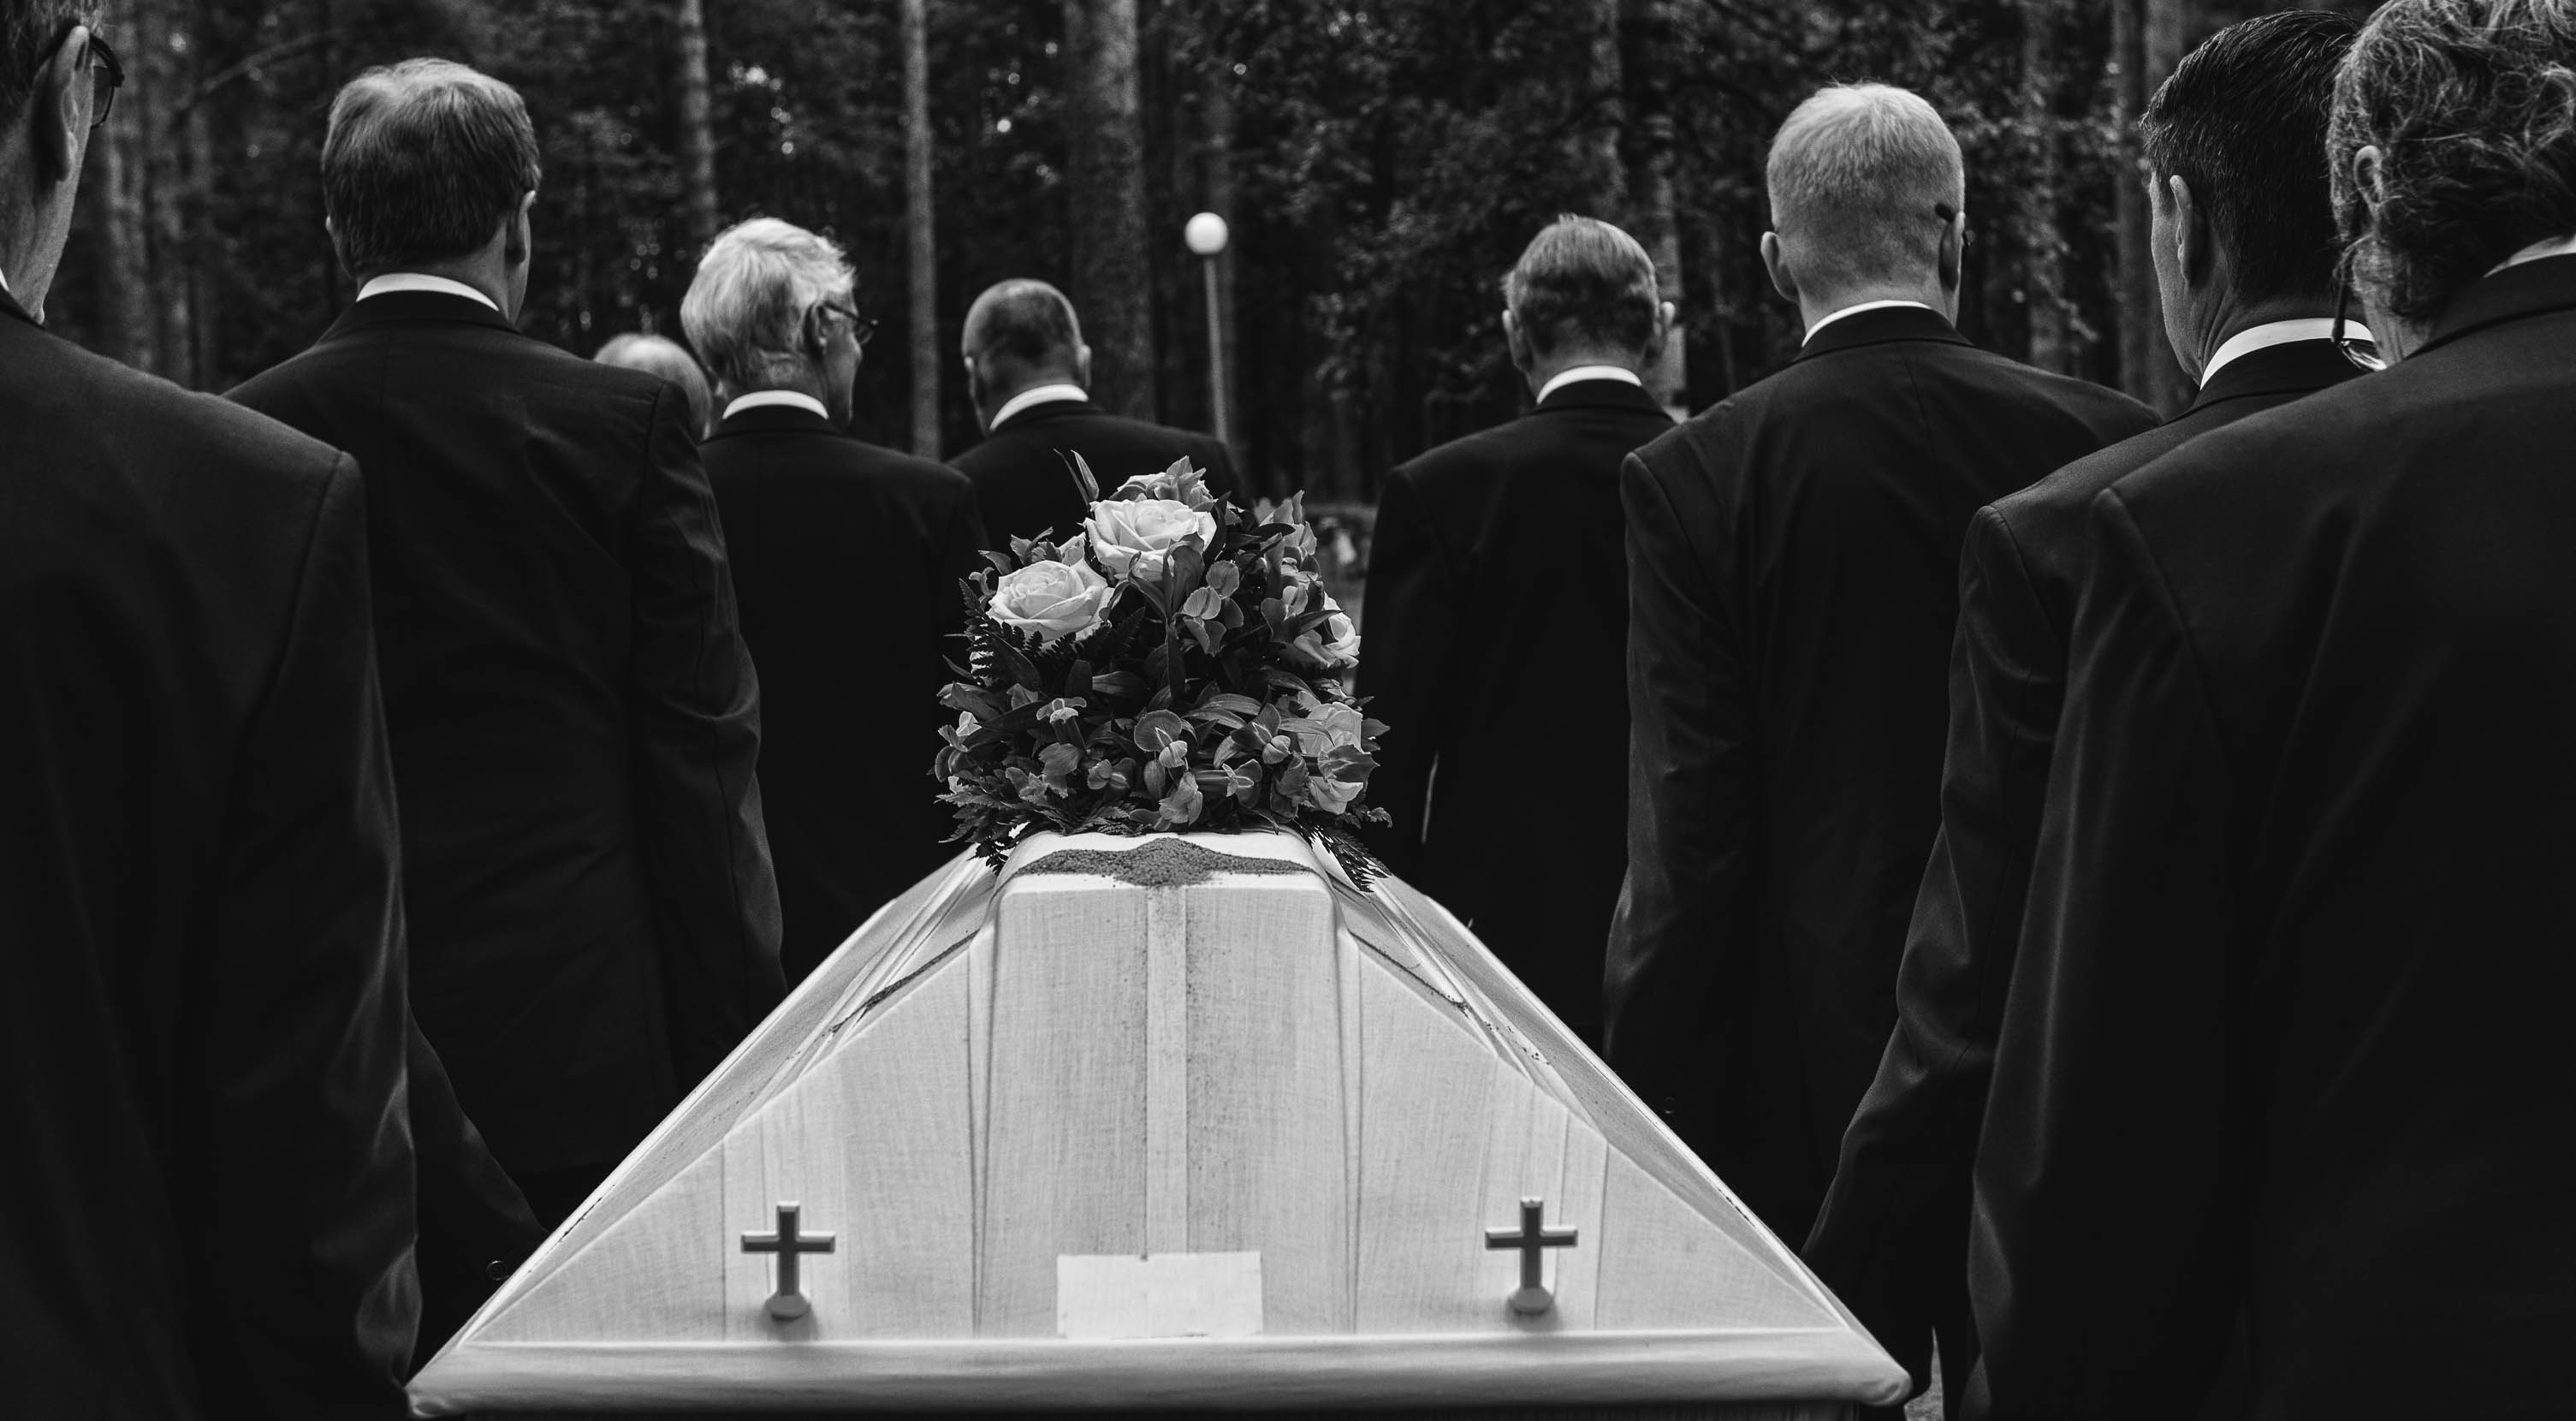 Men carrying a coffin | Source: Shutterstock